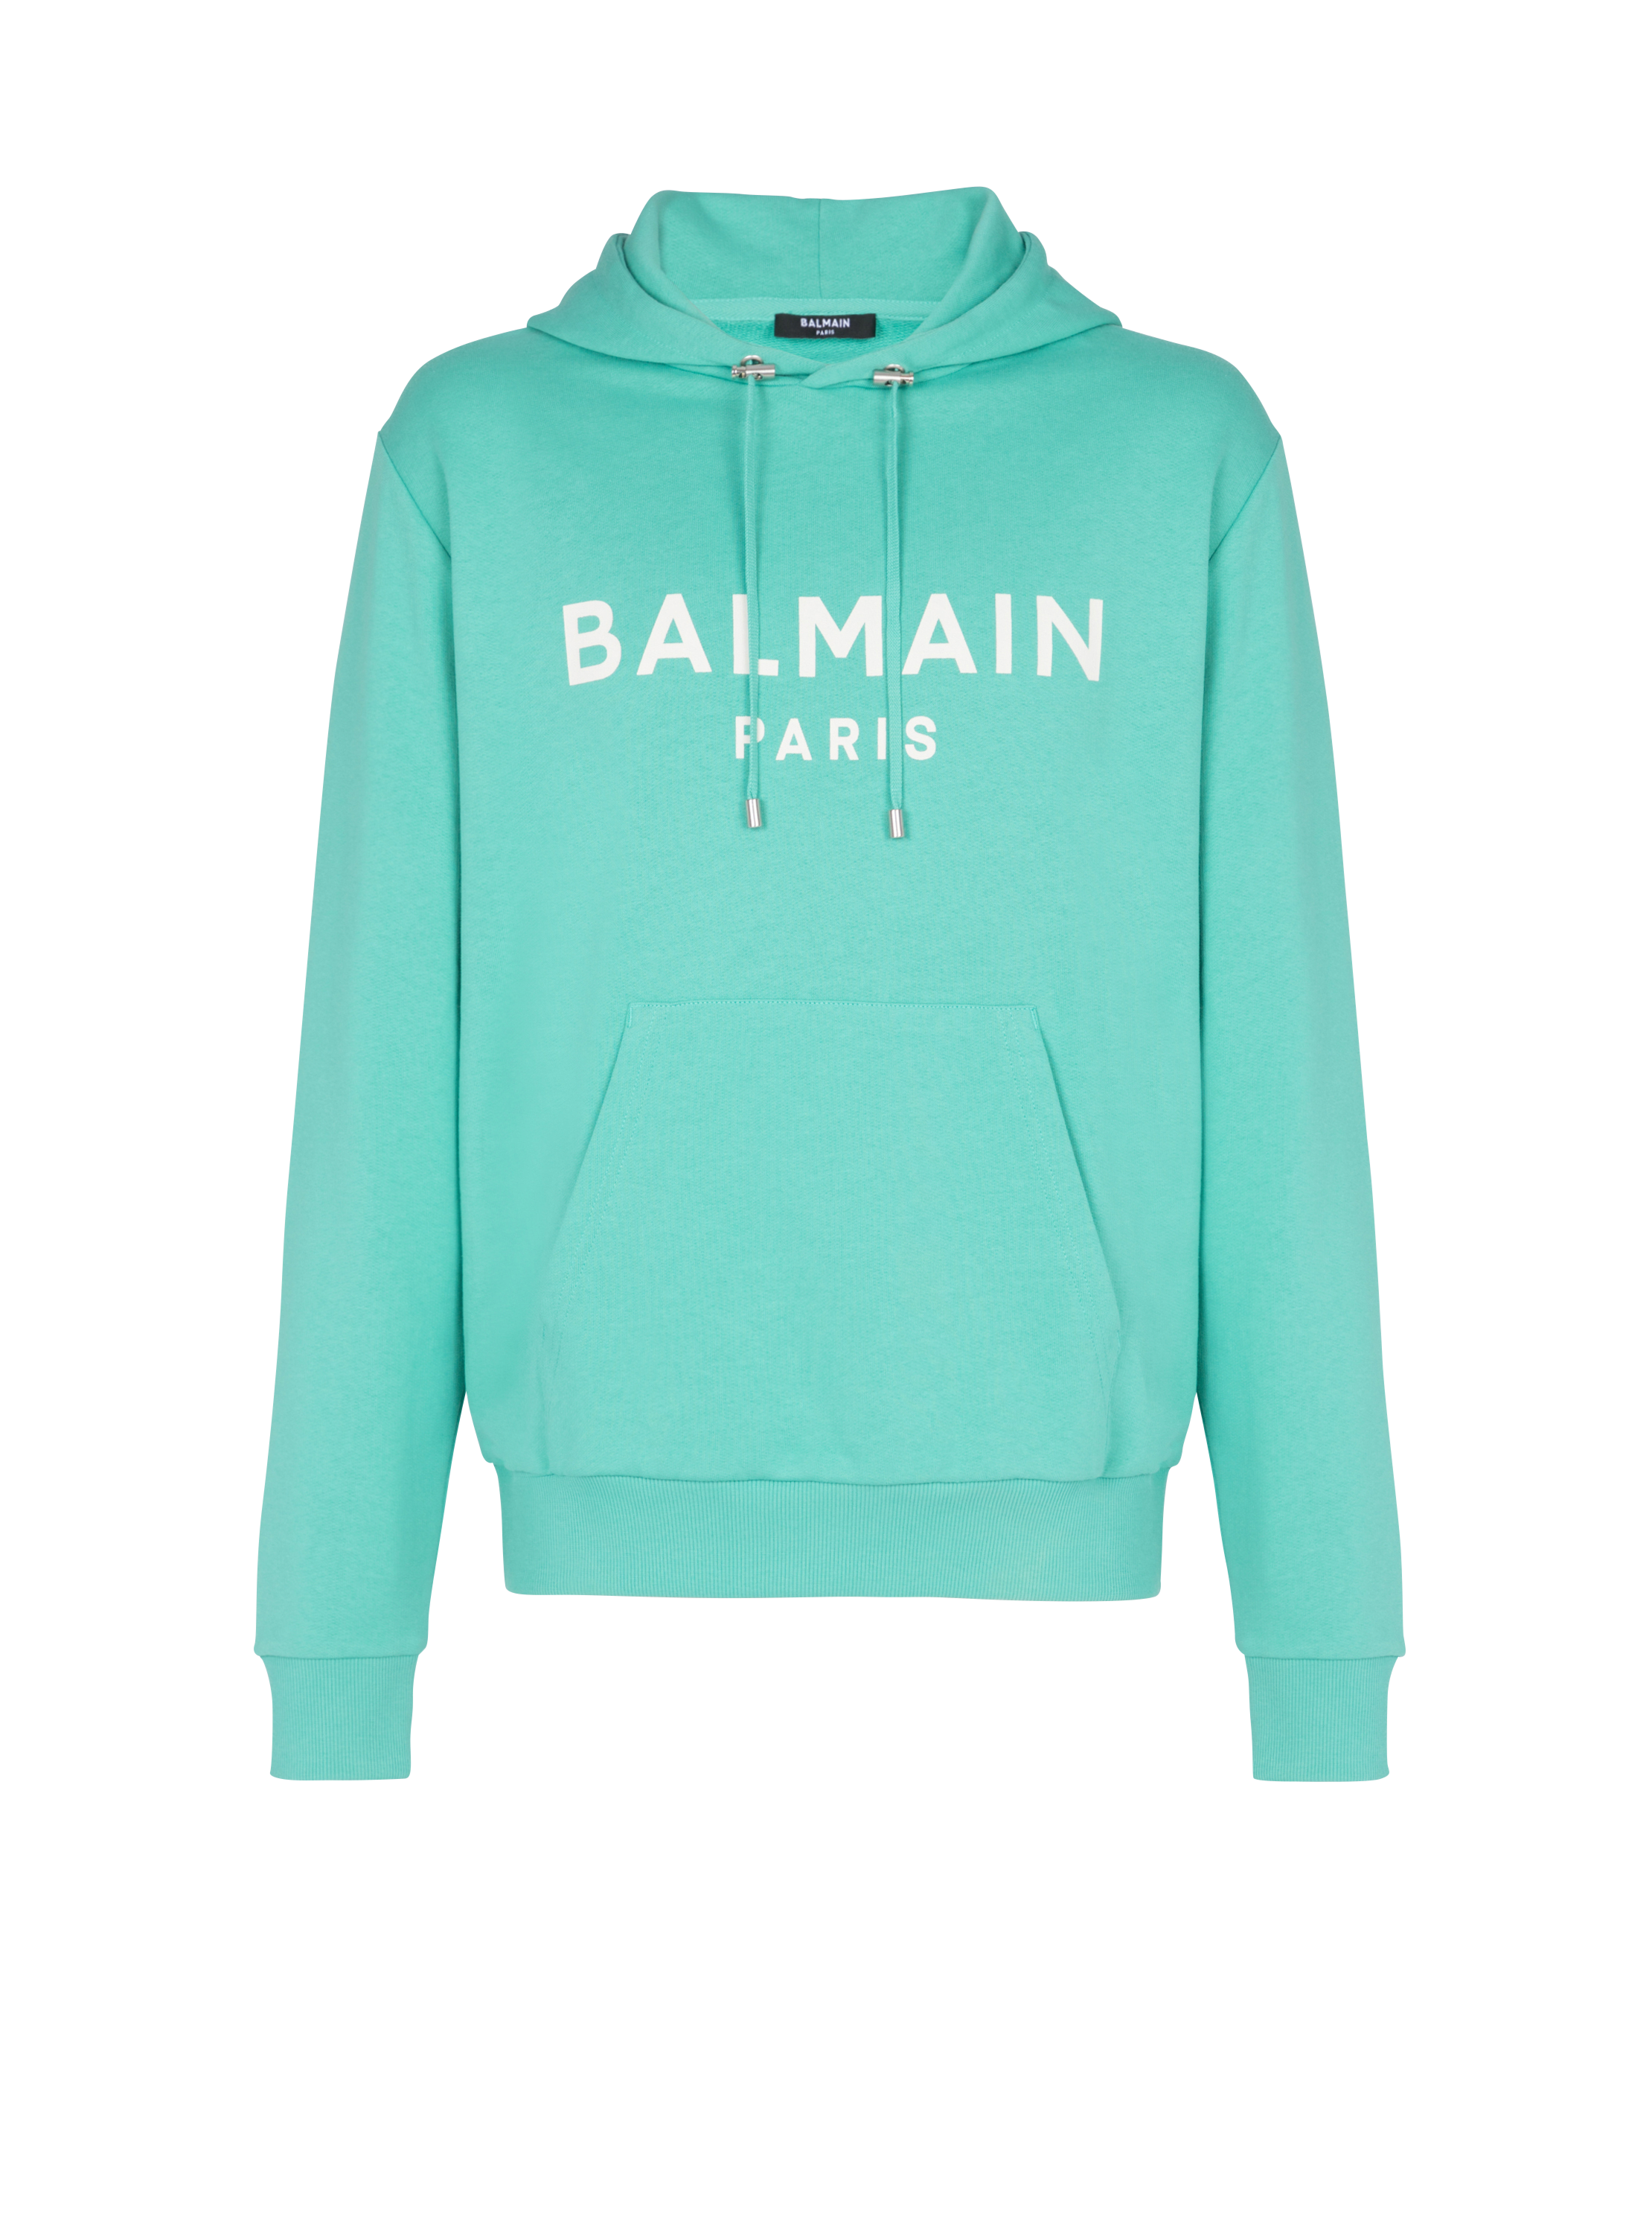 Cotton printed Balmain logo hoodie, blue, hi-res